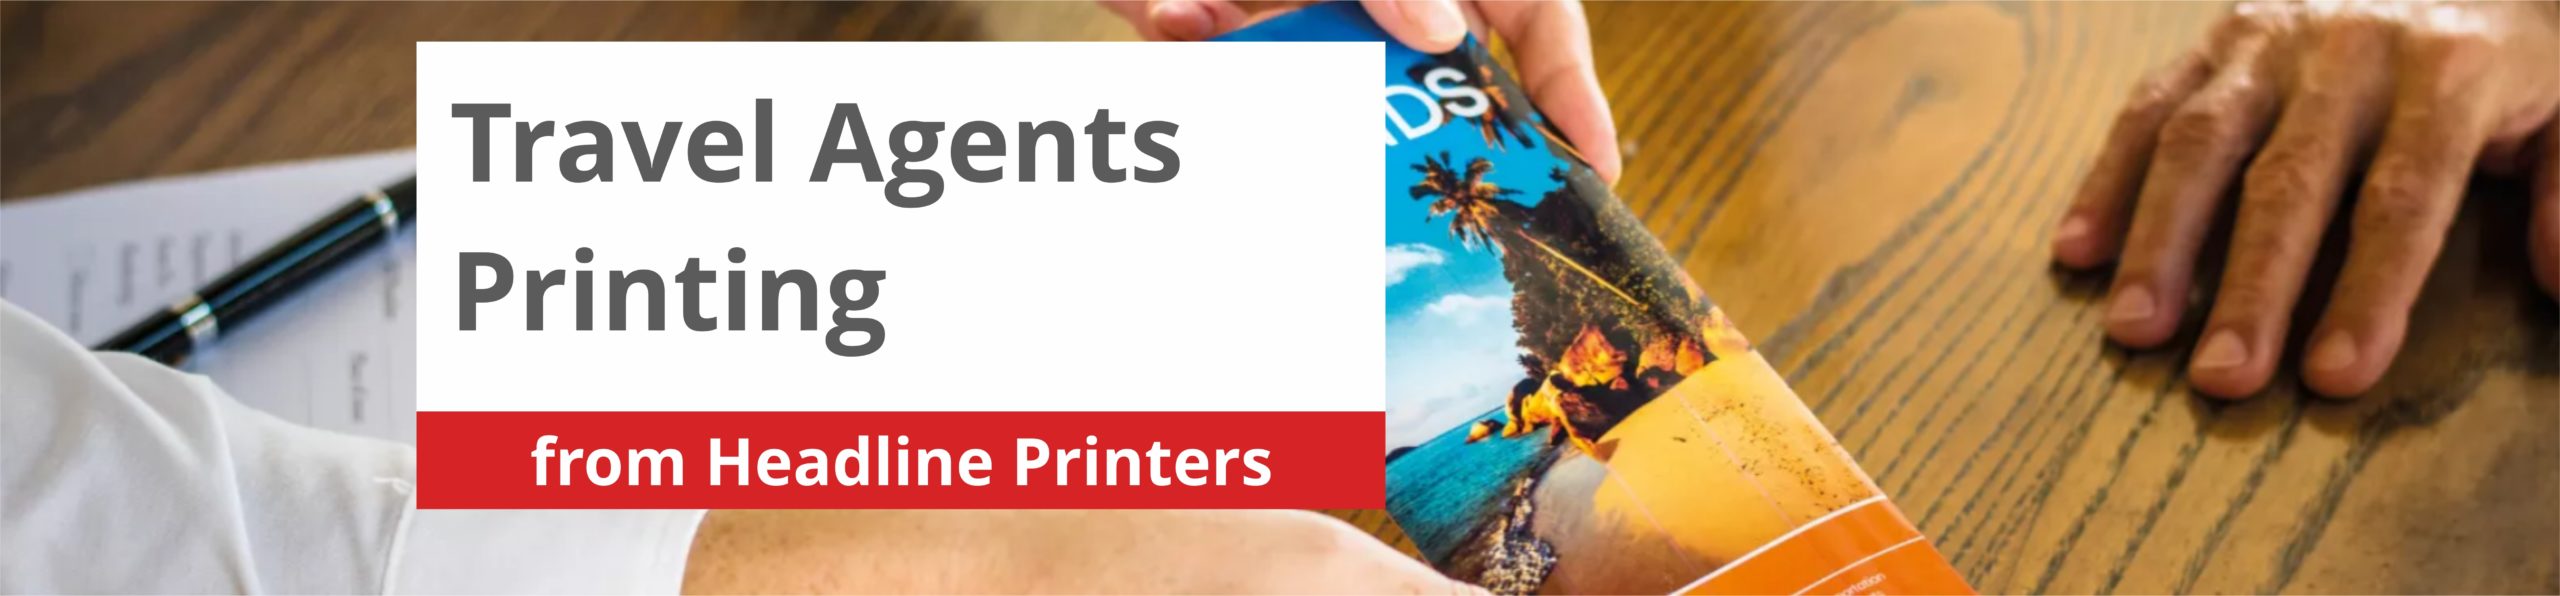 Travel Agents Printing